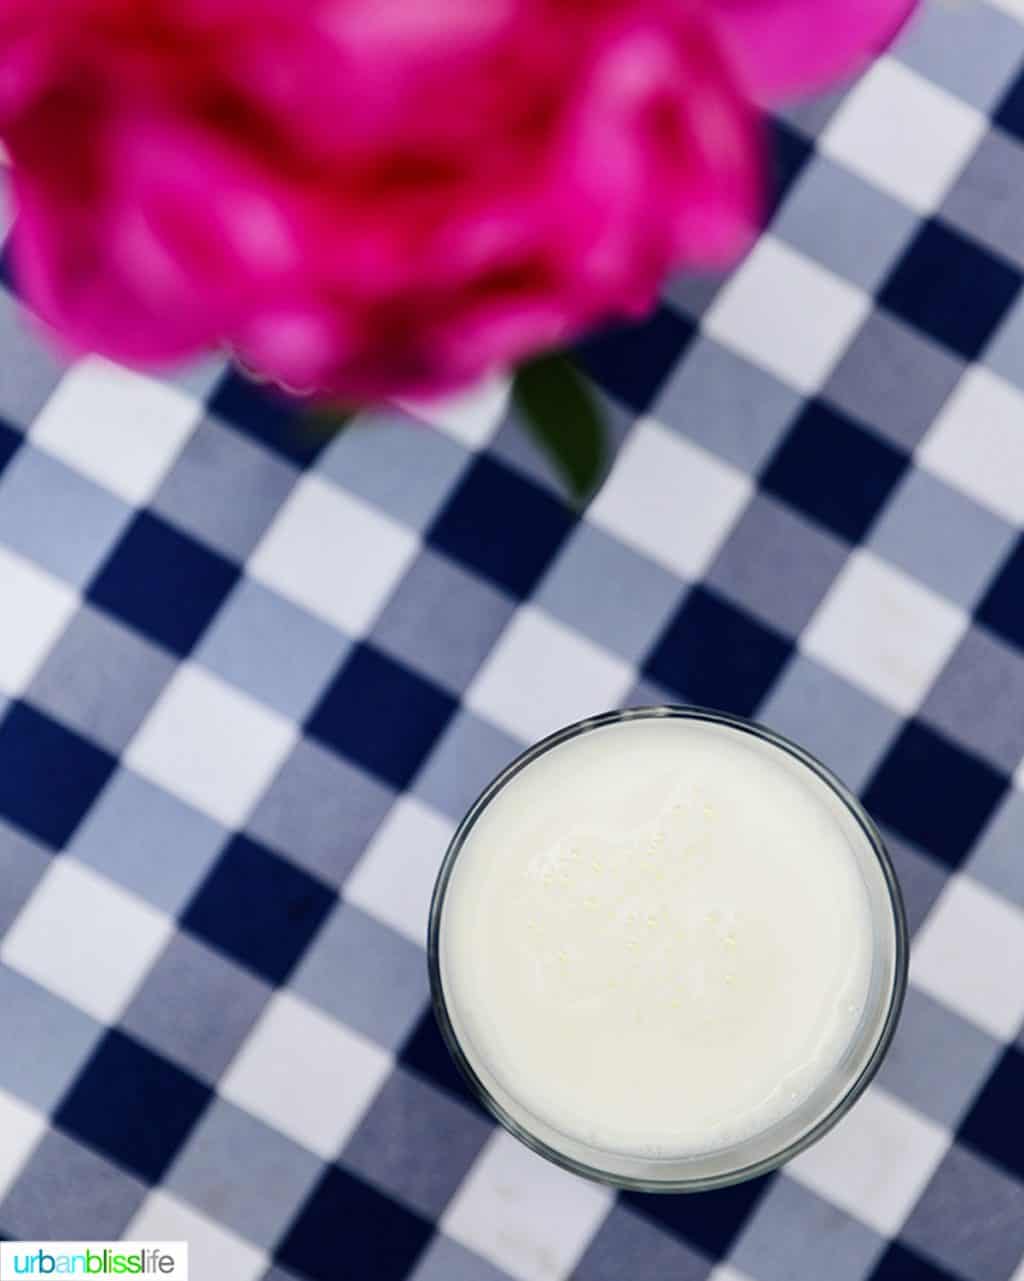 ultra-filtered milk in a glass